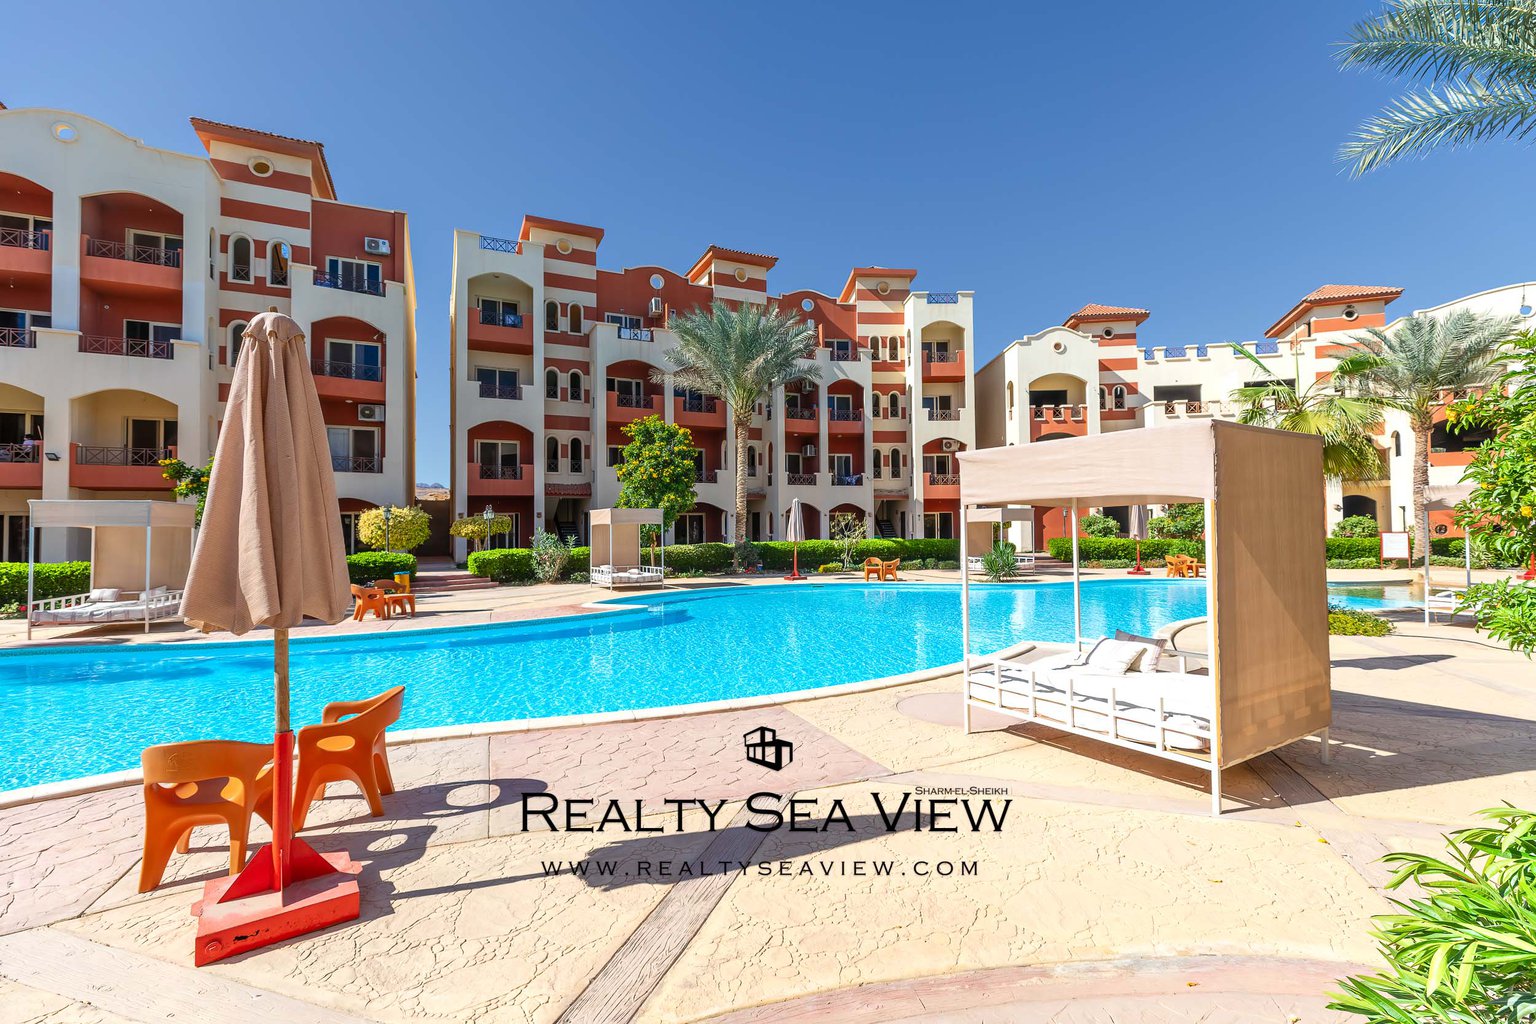 Property for sale in Sharm El Sheikh, Egypt